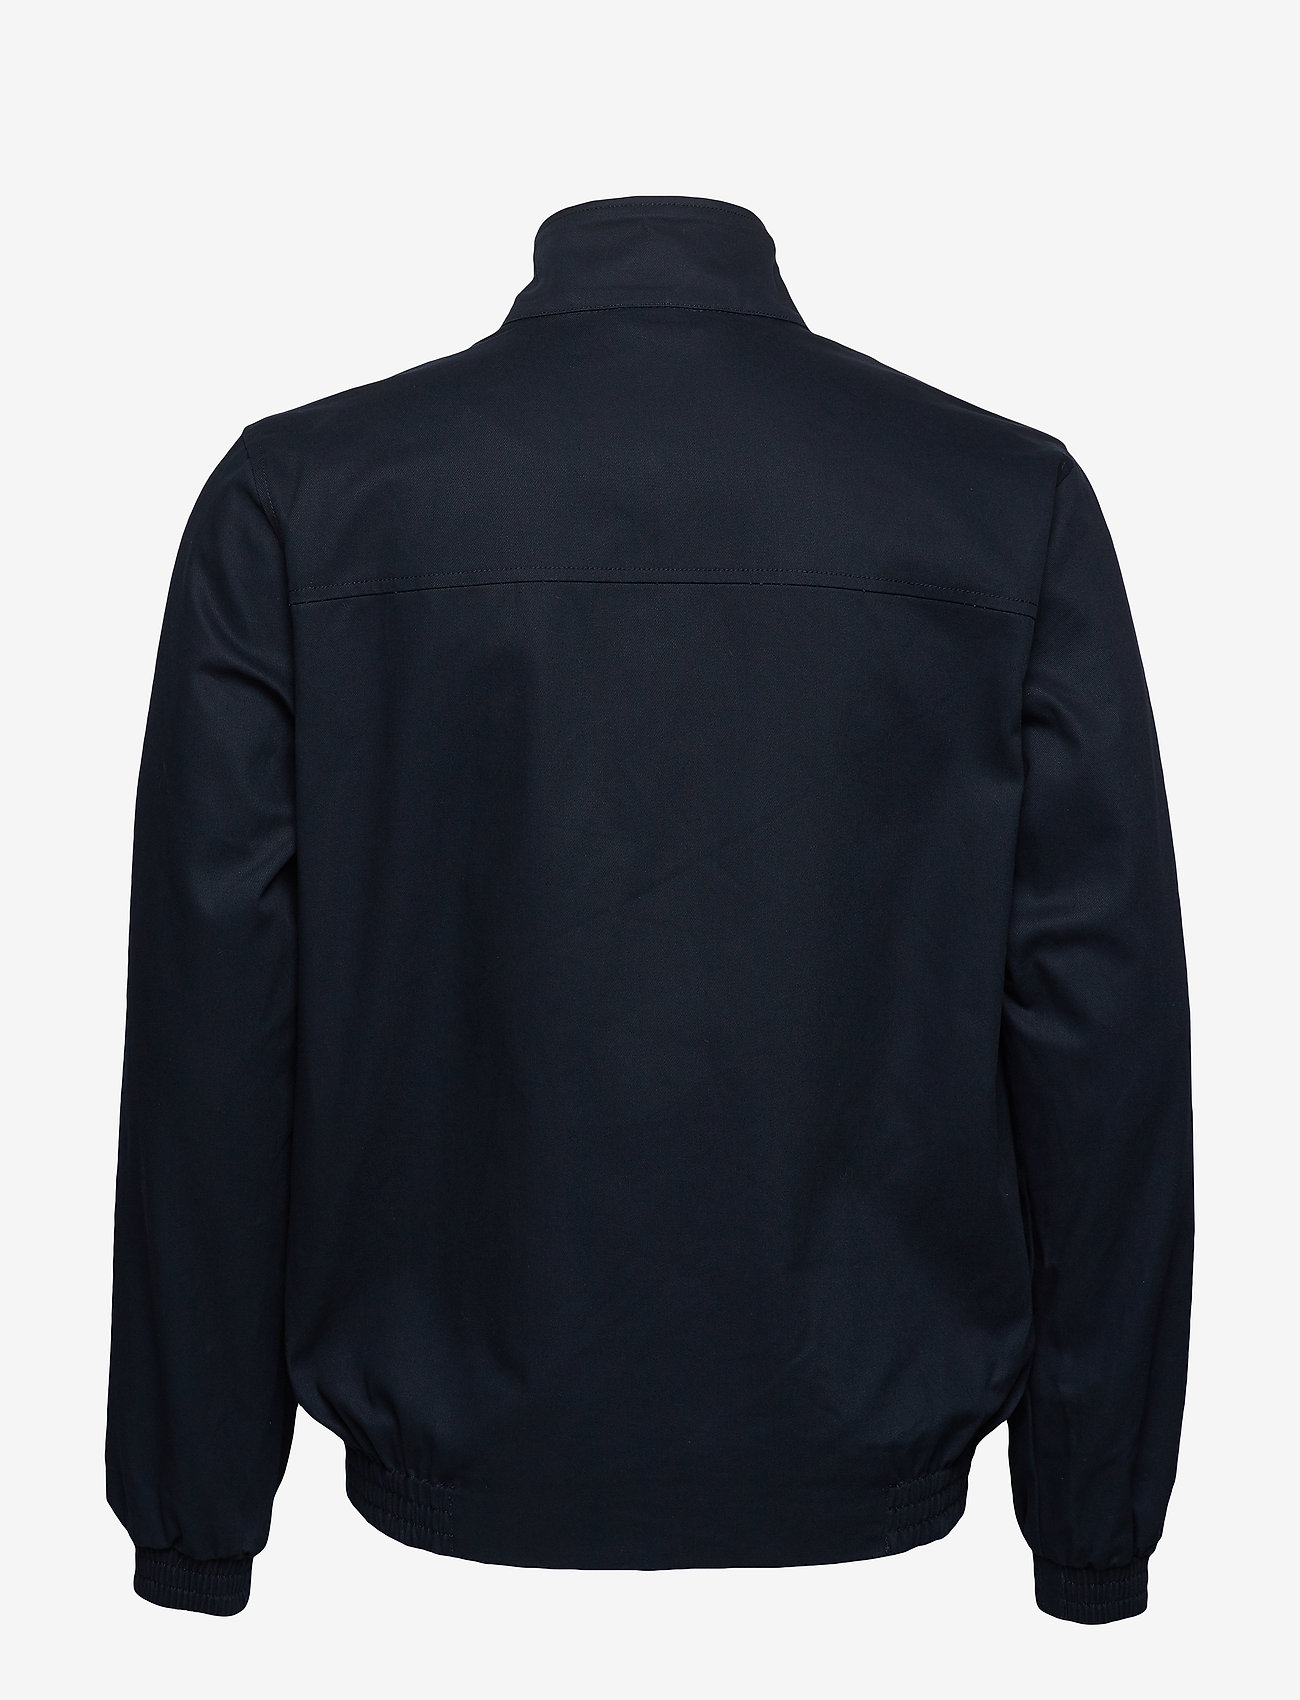 Lyle & Scott - Harrington jacket - spring jackets - dark navy - 1